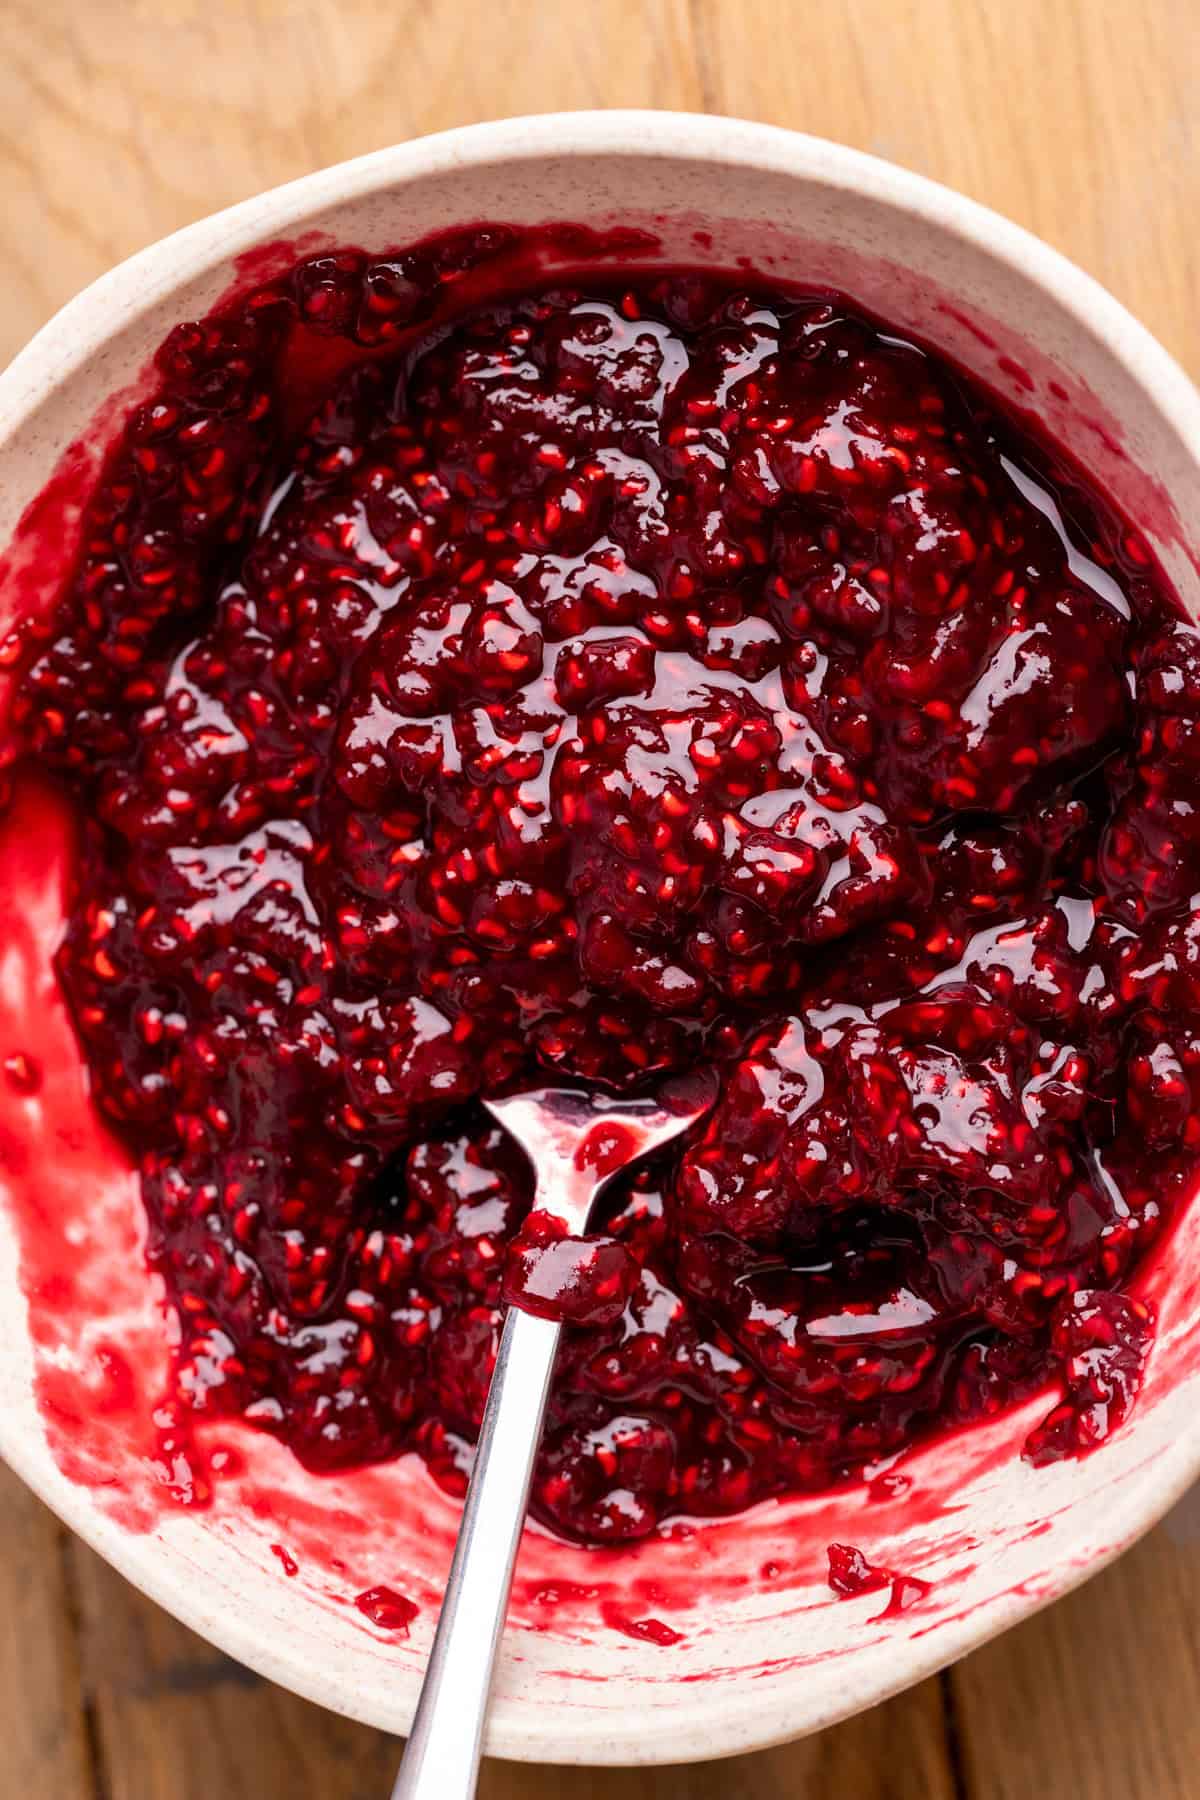 Raspberry jam in a bowl.